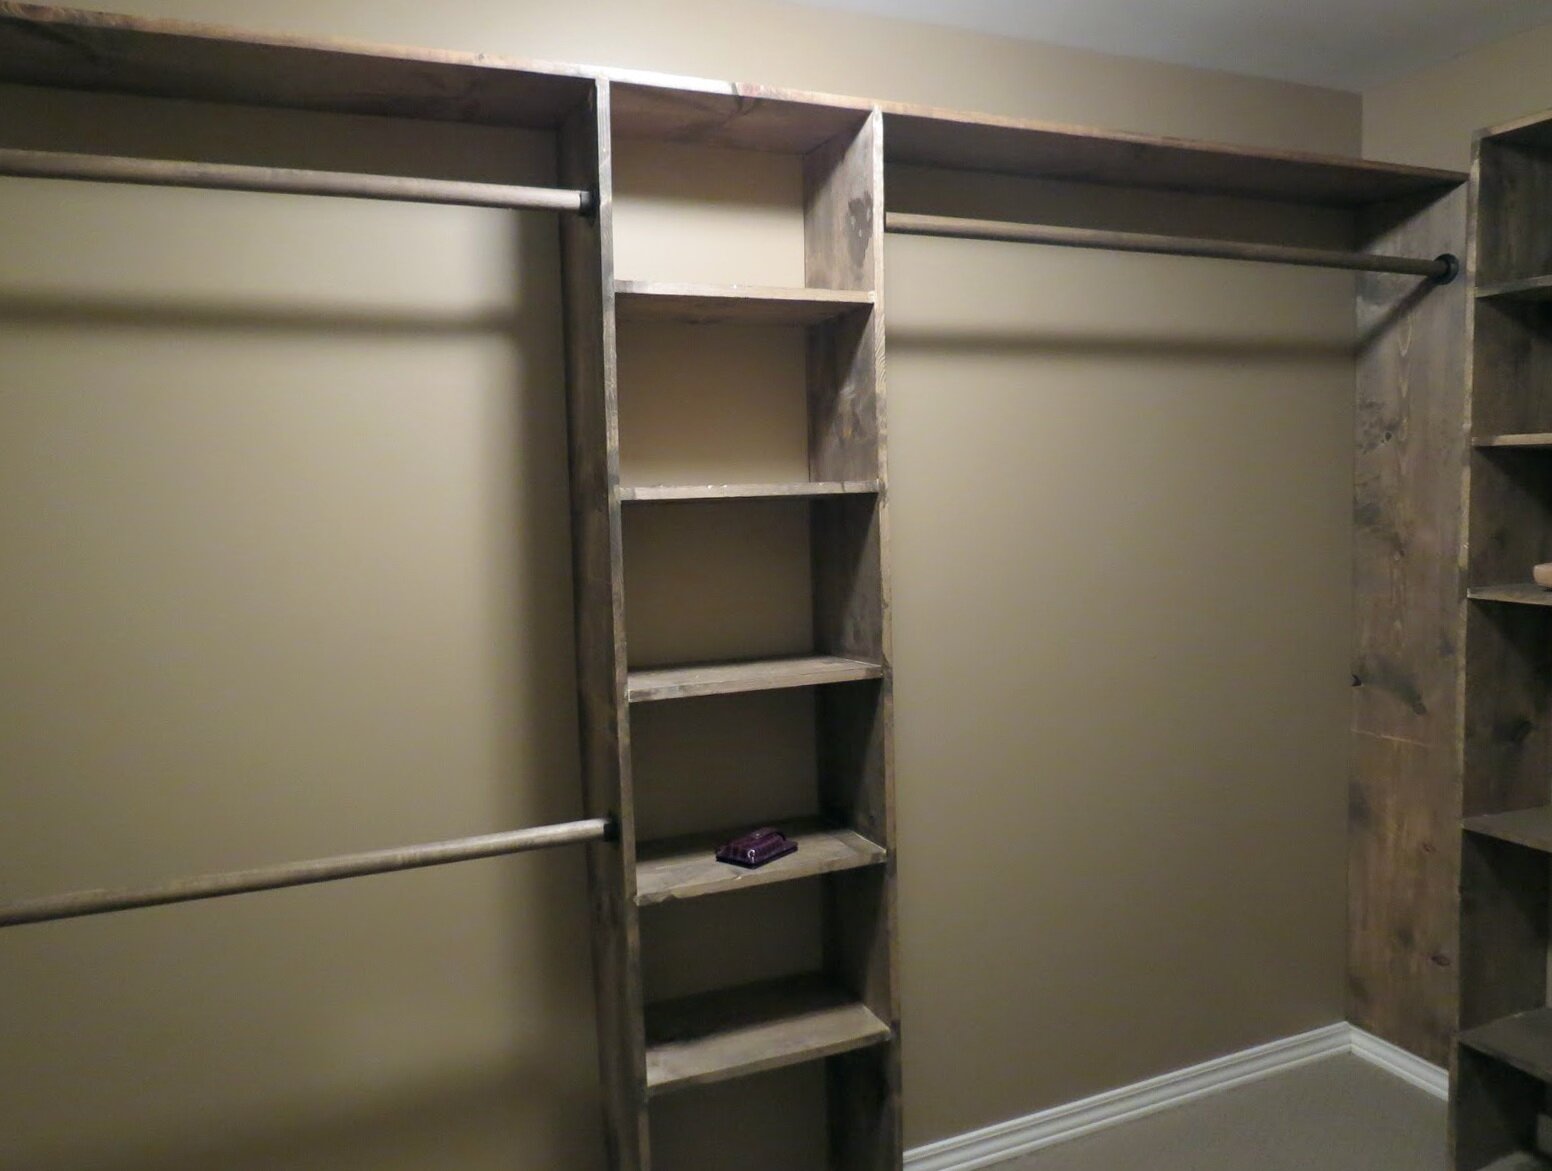 Inspiring Interior Storage Design Ideas with Diy Walk in Closet: Diy Walk In Closet | Closet Shelving Ideas Diy | Best Do It Yourself Closet Systems